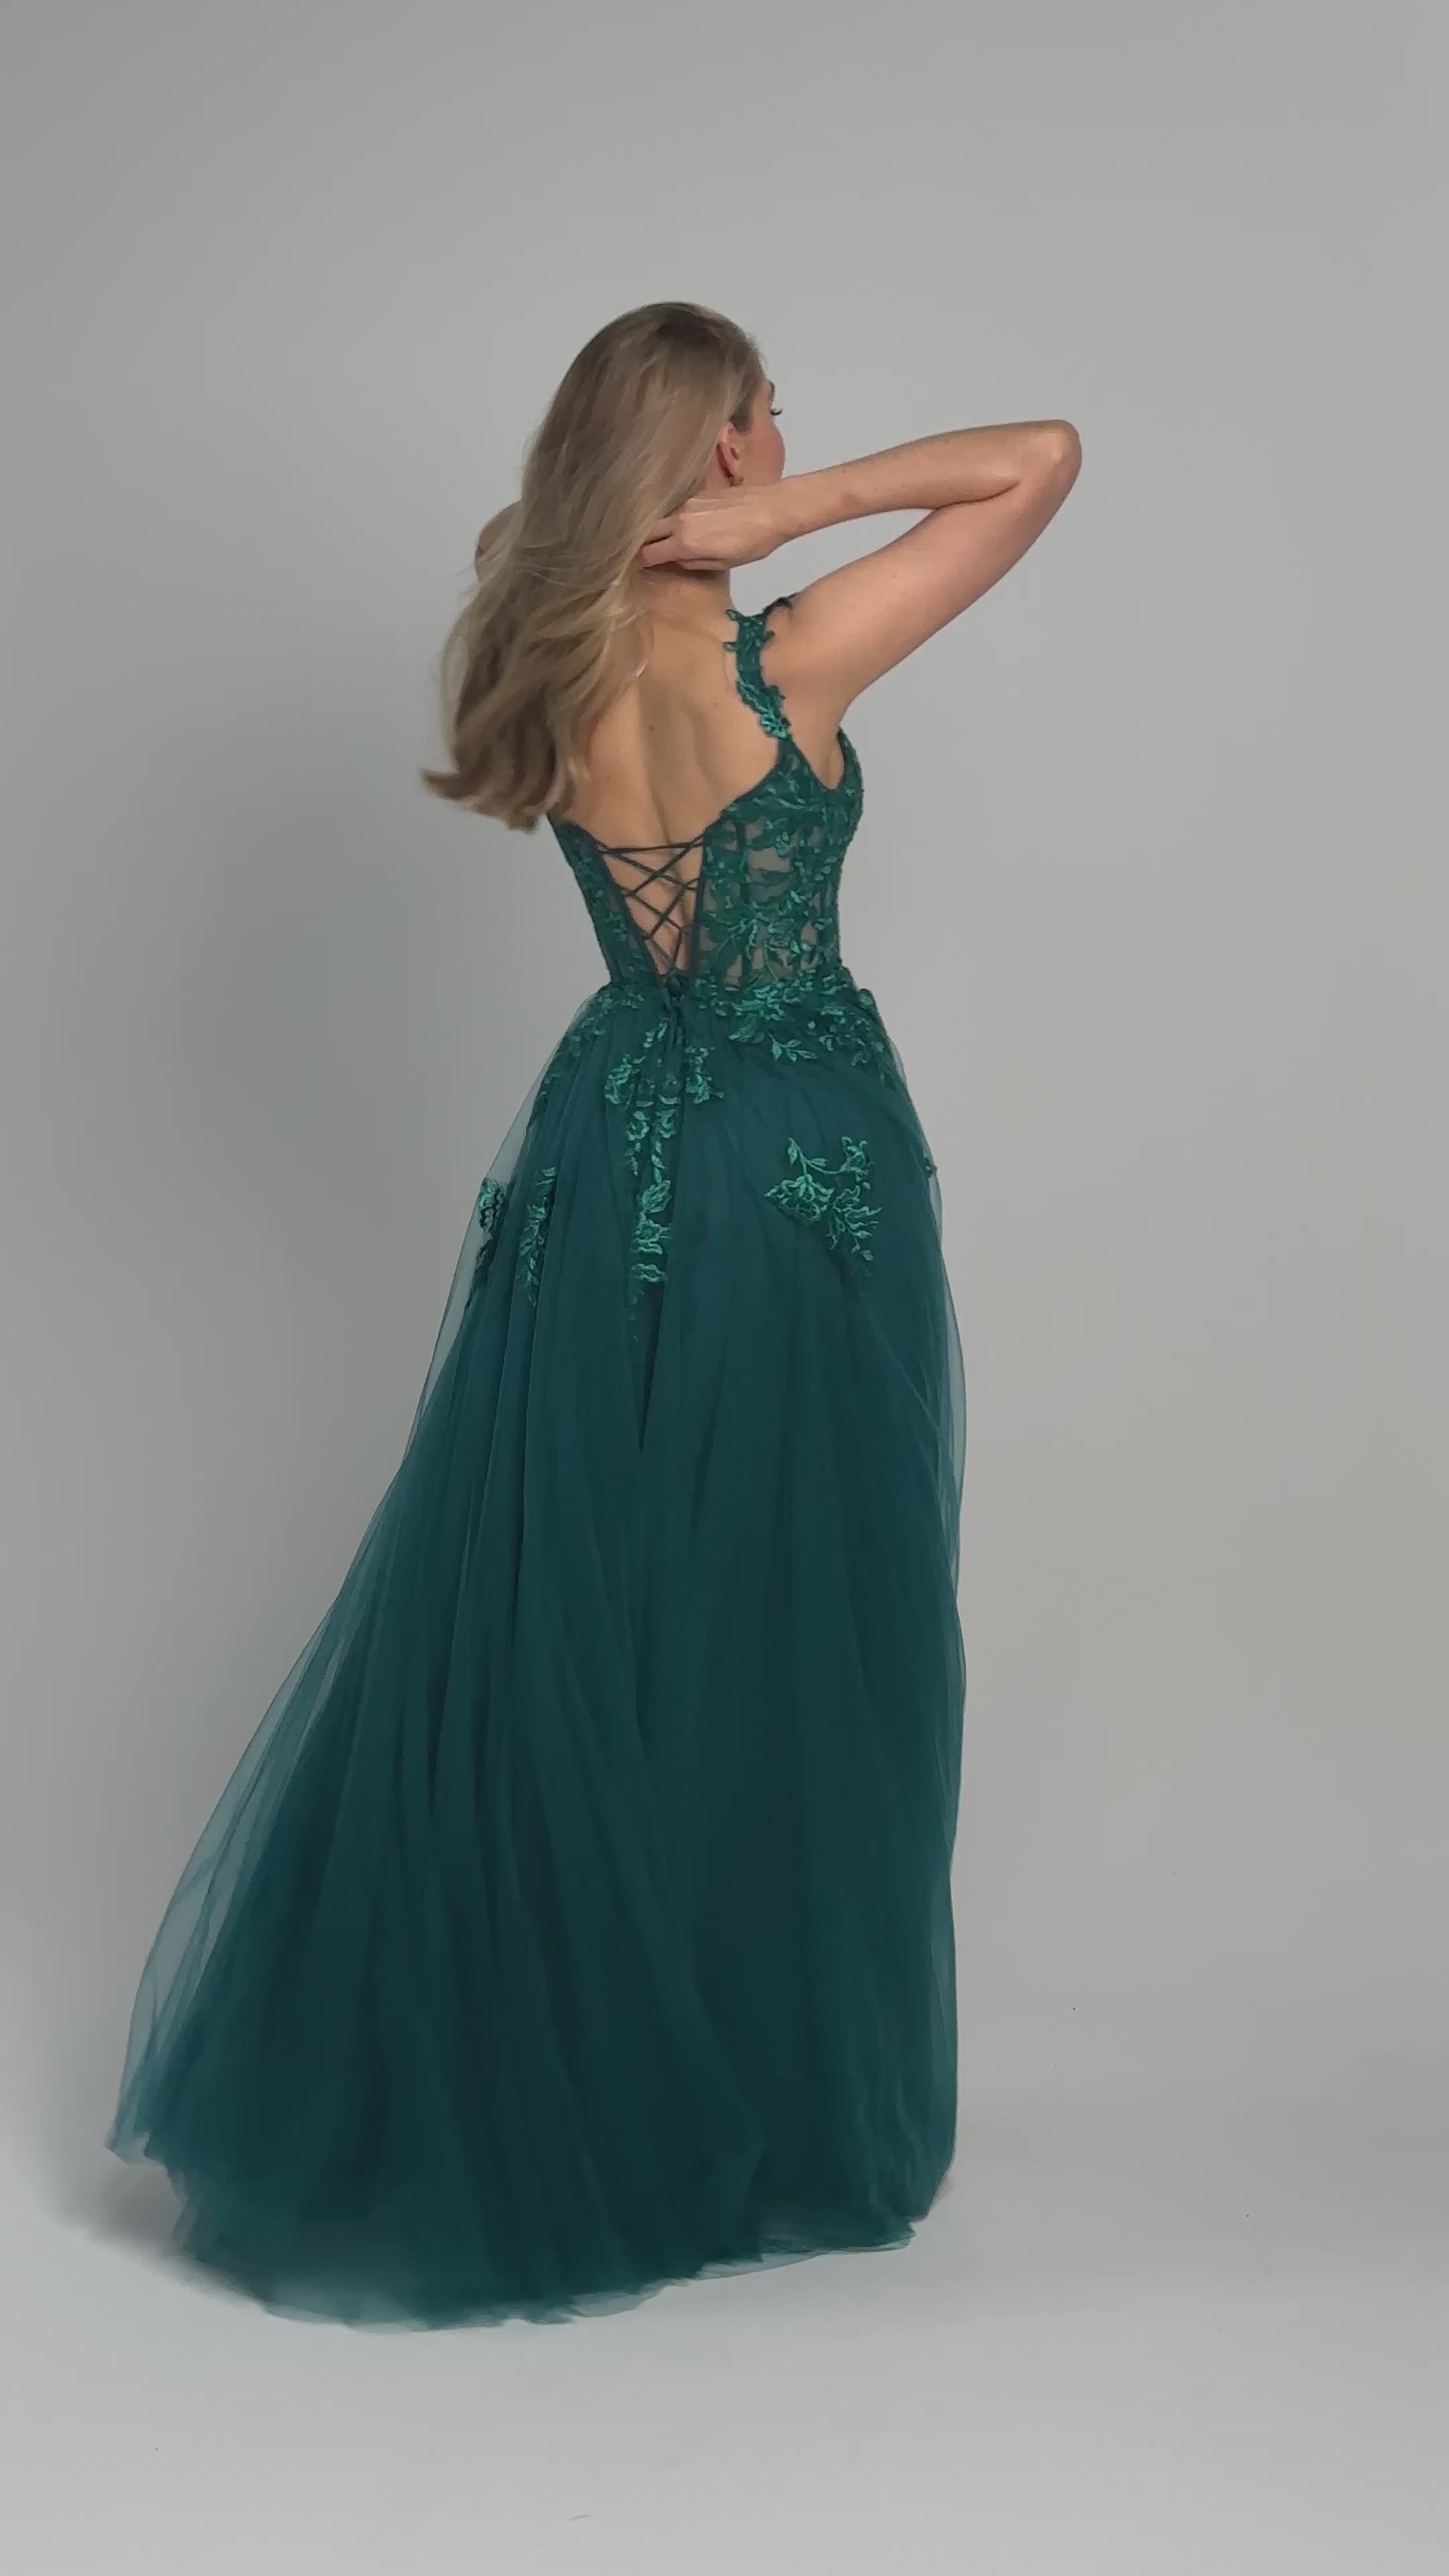 Maeve PO2317 by Tania Olsen Black, & Emerald Formal Dress